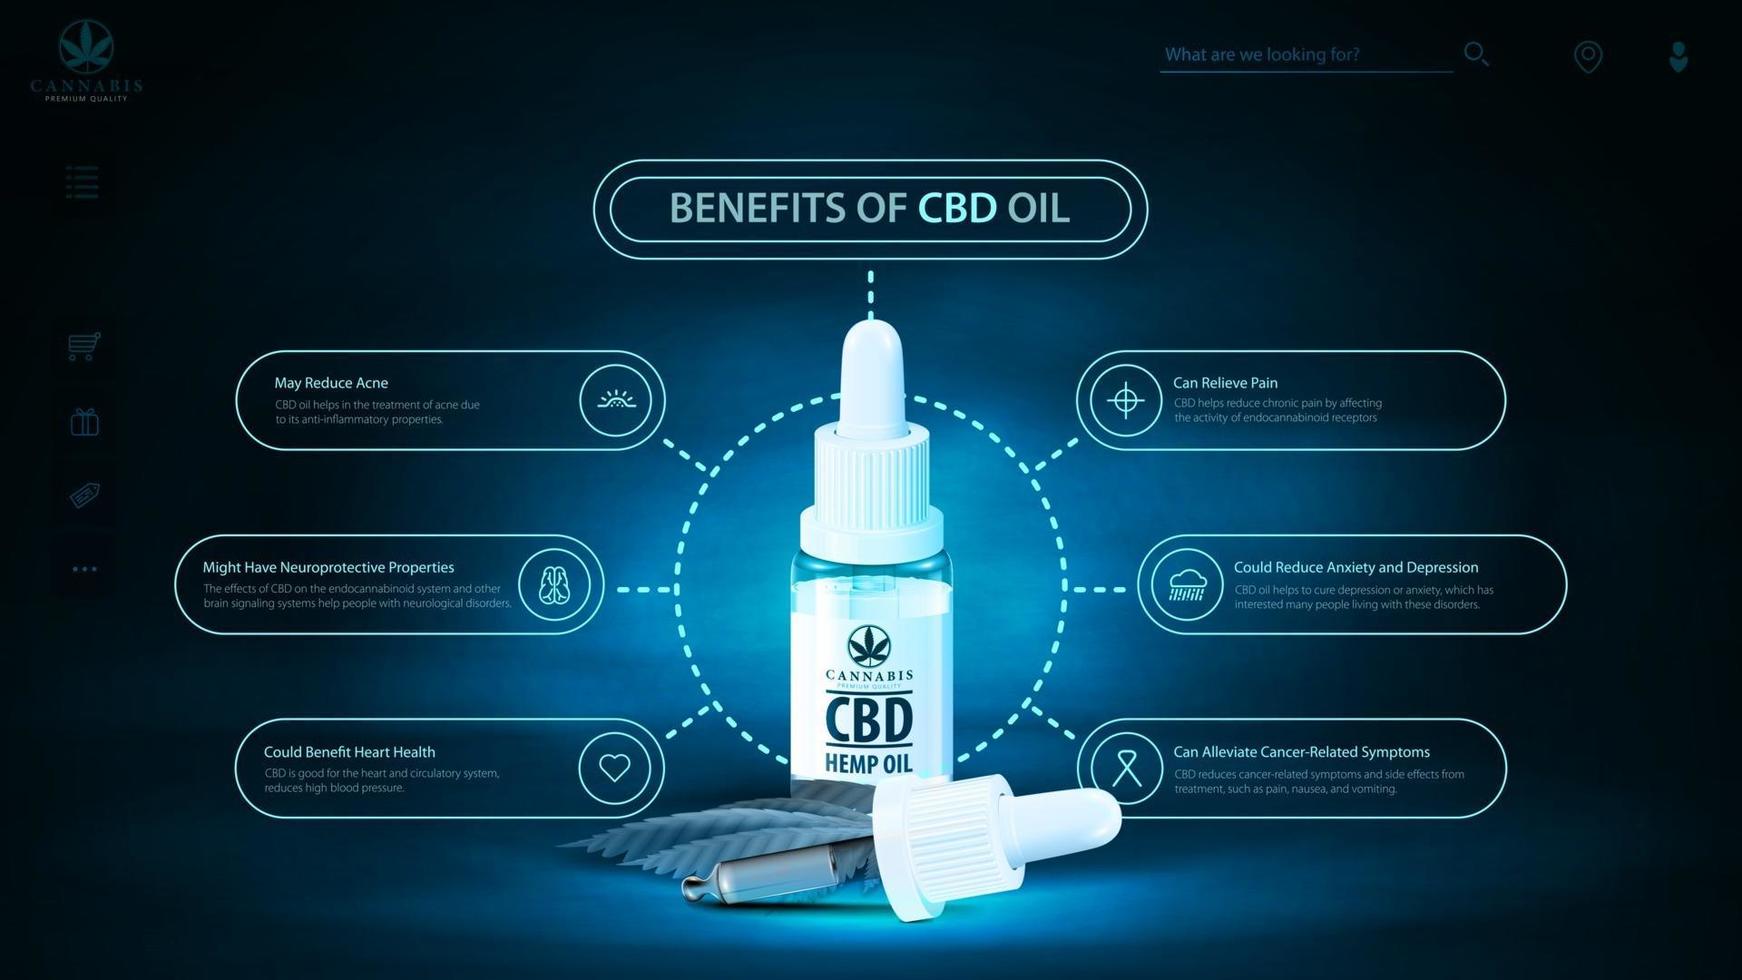 Beneficios del uso de aceite cbd, encabezado digital azul y oscuro para sitio web con botella de aceite cbd con pipeta. cartel con escena de neón oscuro y holograma de aceite de cbd. vector